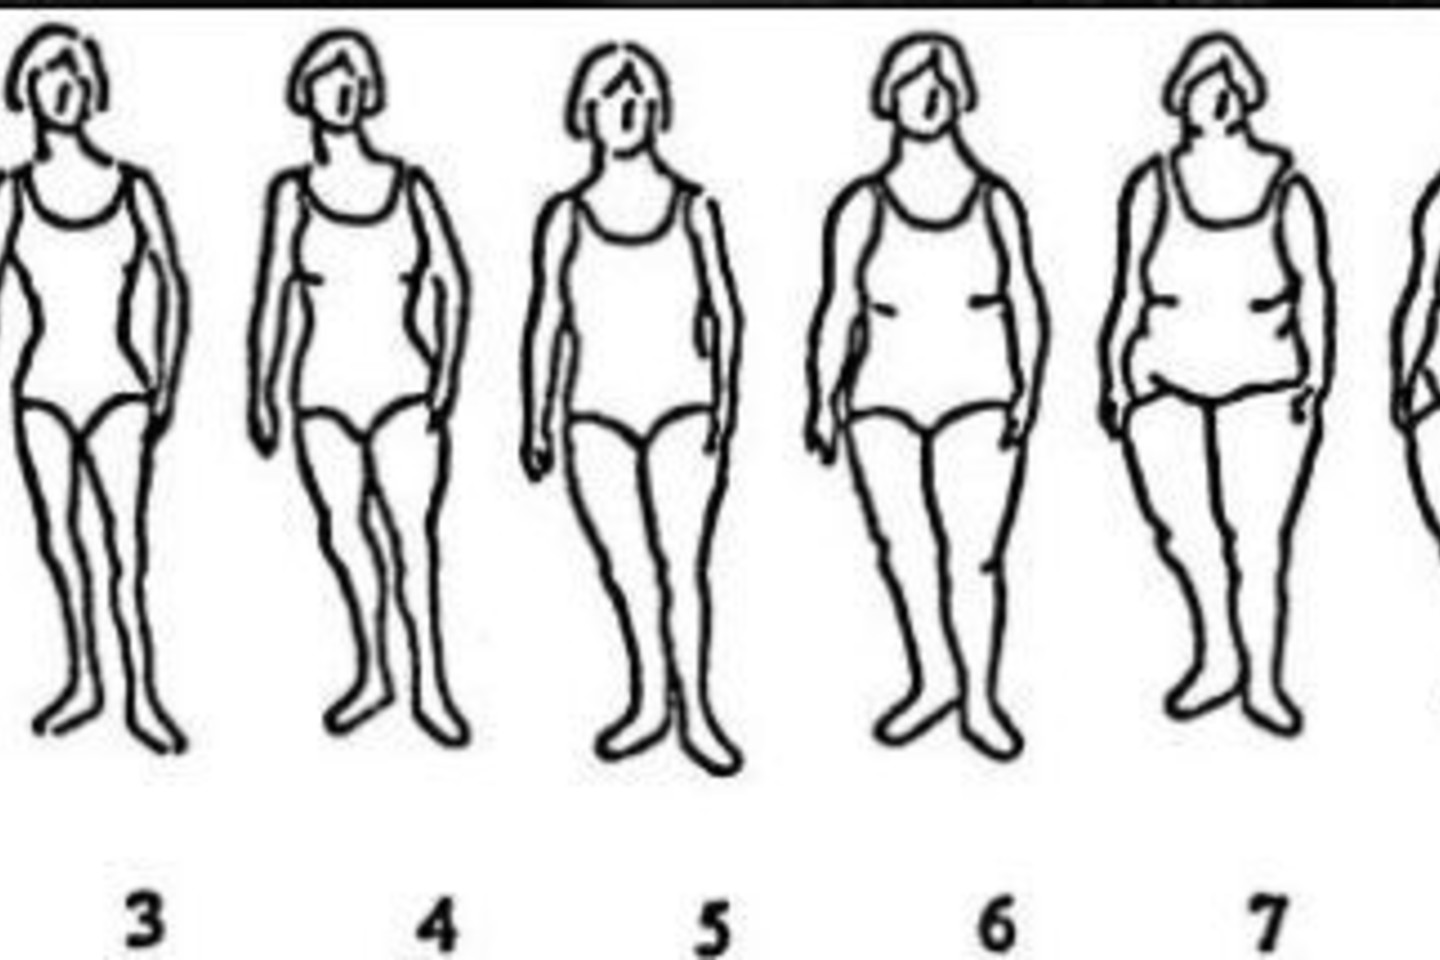 1995 m. atliktas Thompsono ir Gray tyrimas „Development and validation of a new body-image assessment scale“.